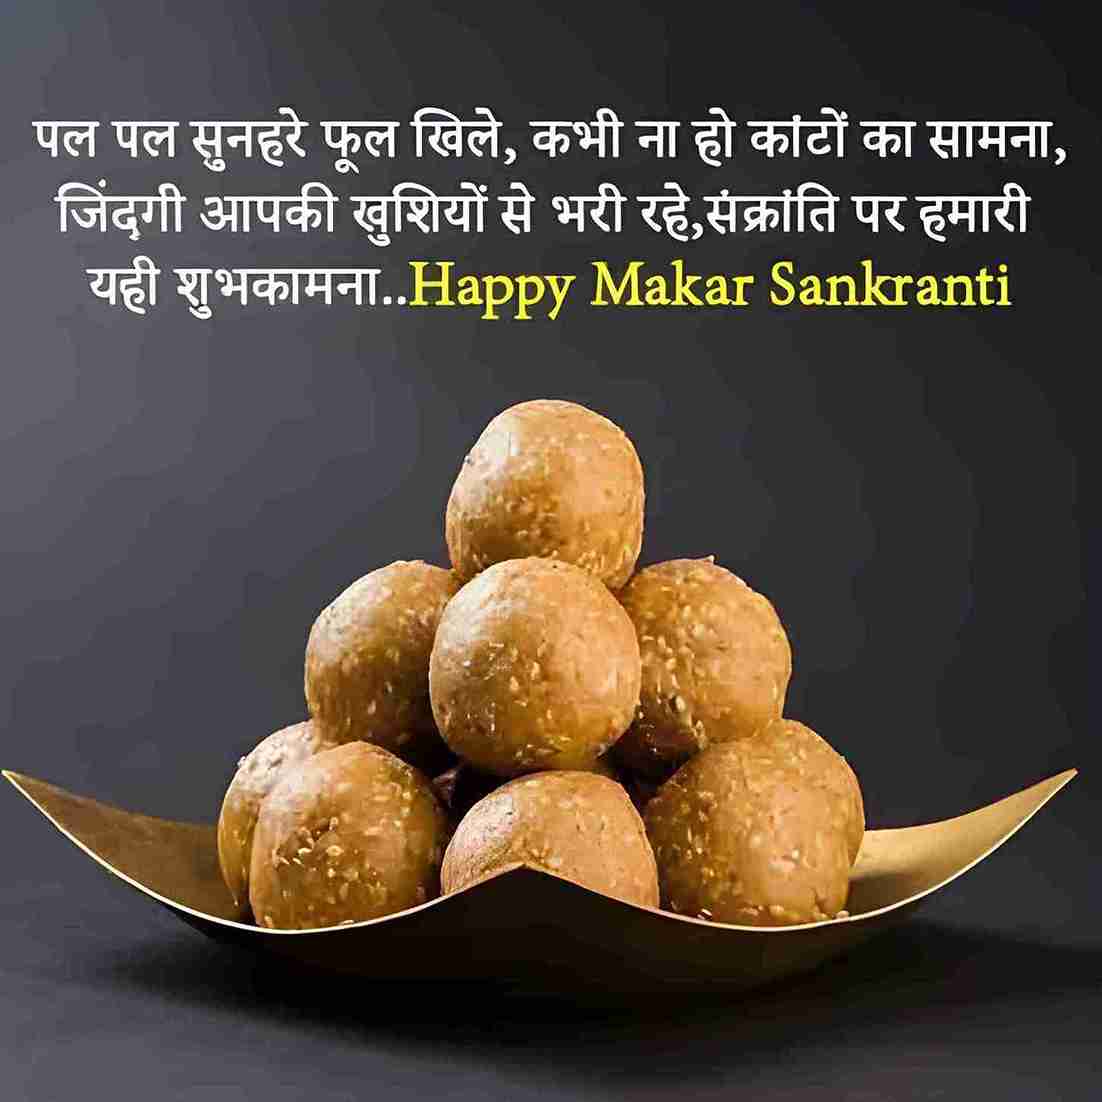 Happy Makar Sankranti wishes hindi